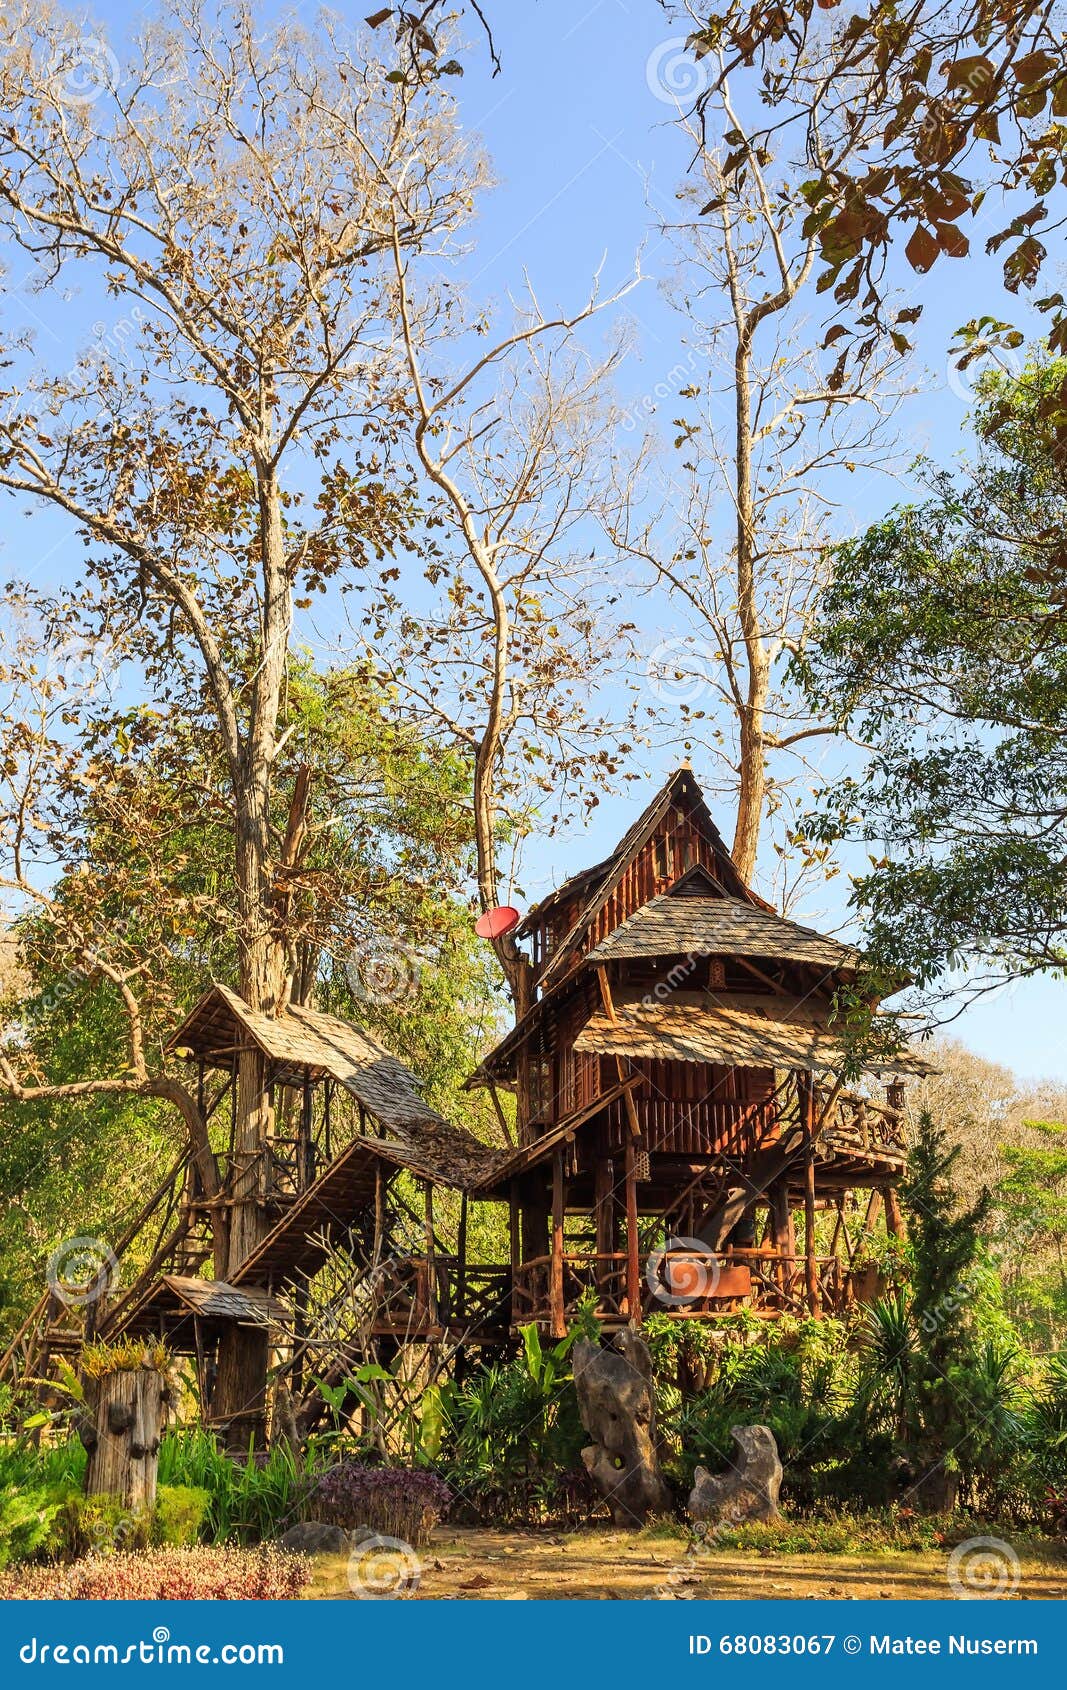 lodging treehouse at mae chaem